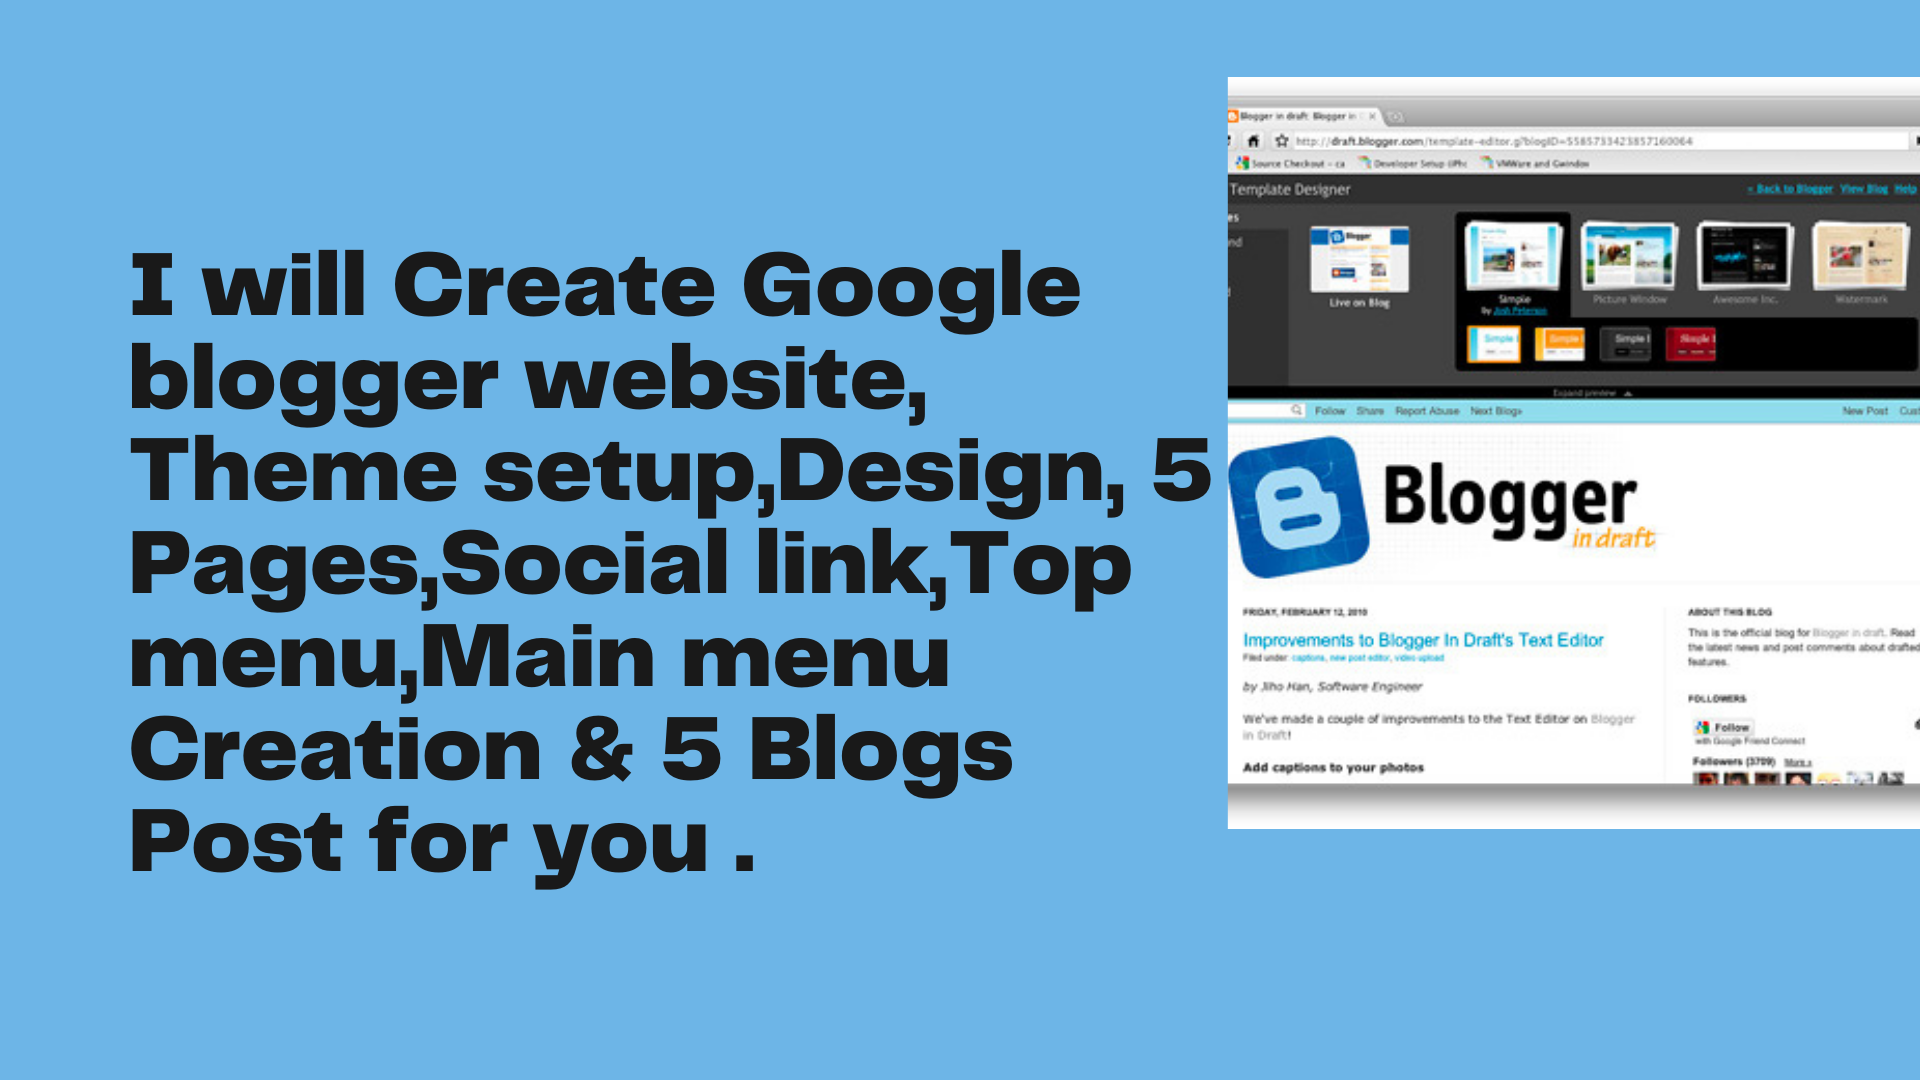 I will create a google blogger website, theme setup, design, pages,social link, manu creation & 5 bl